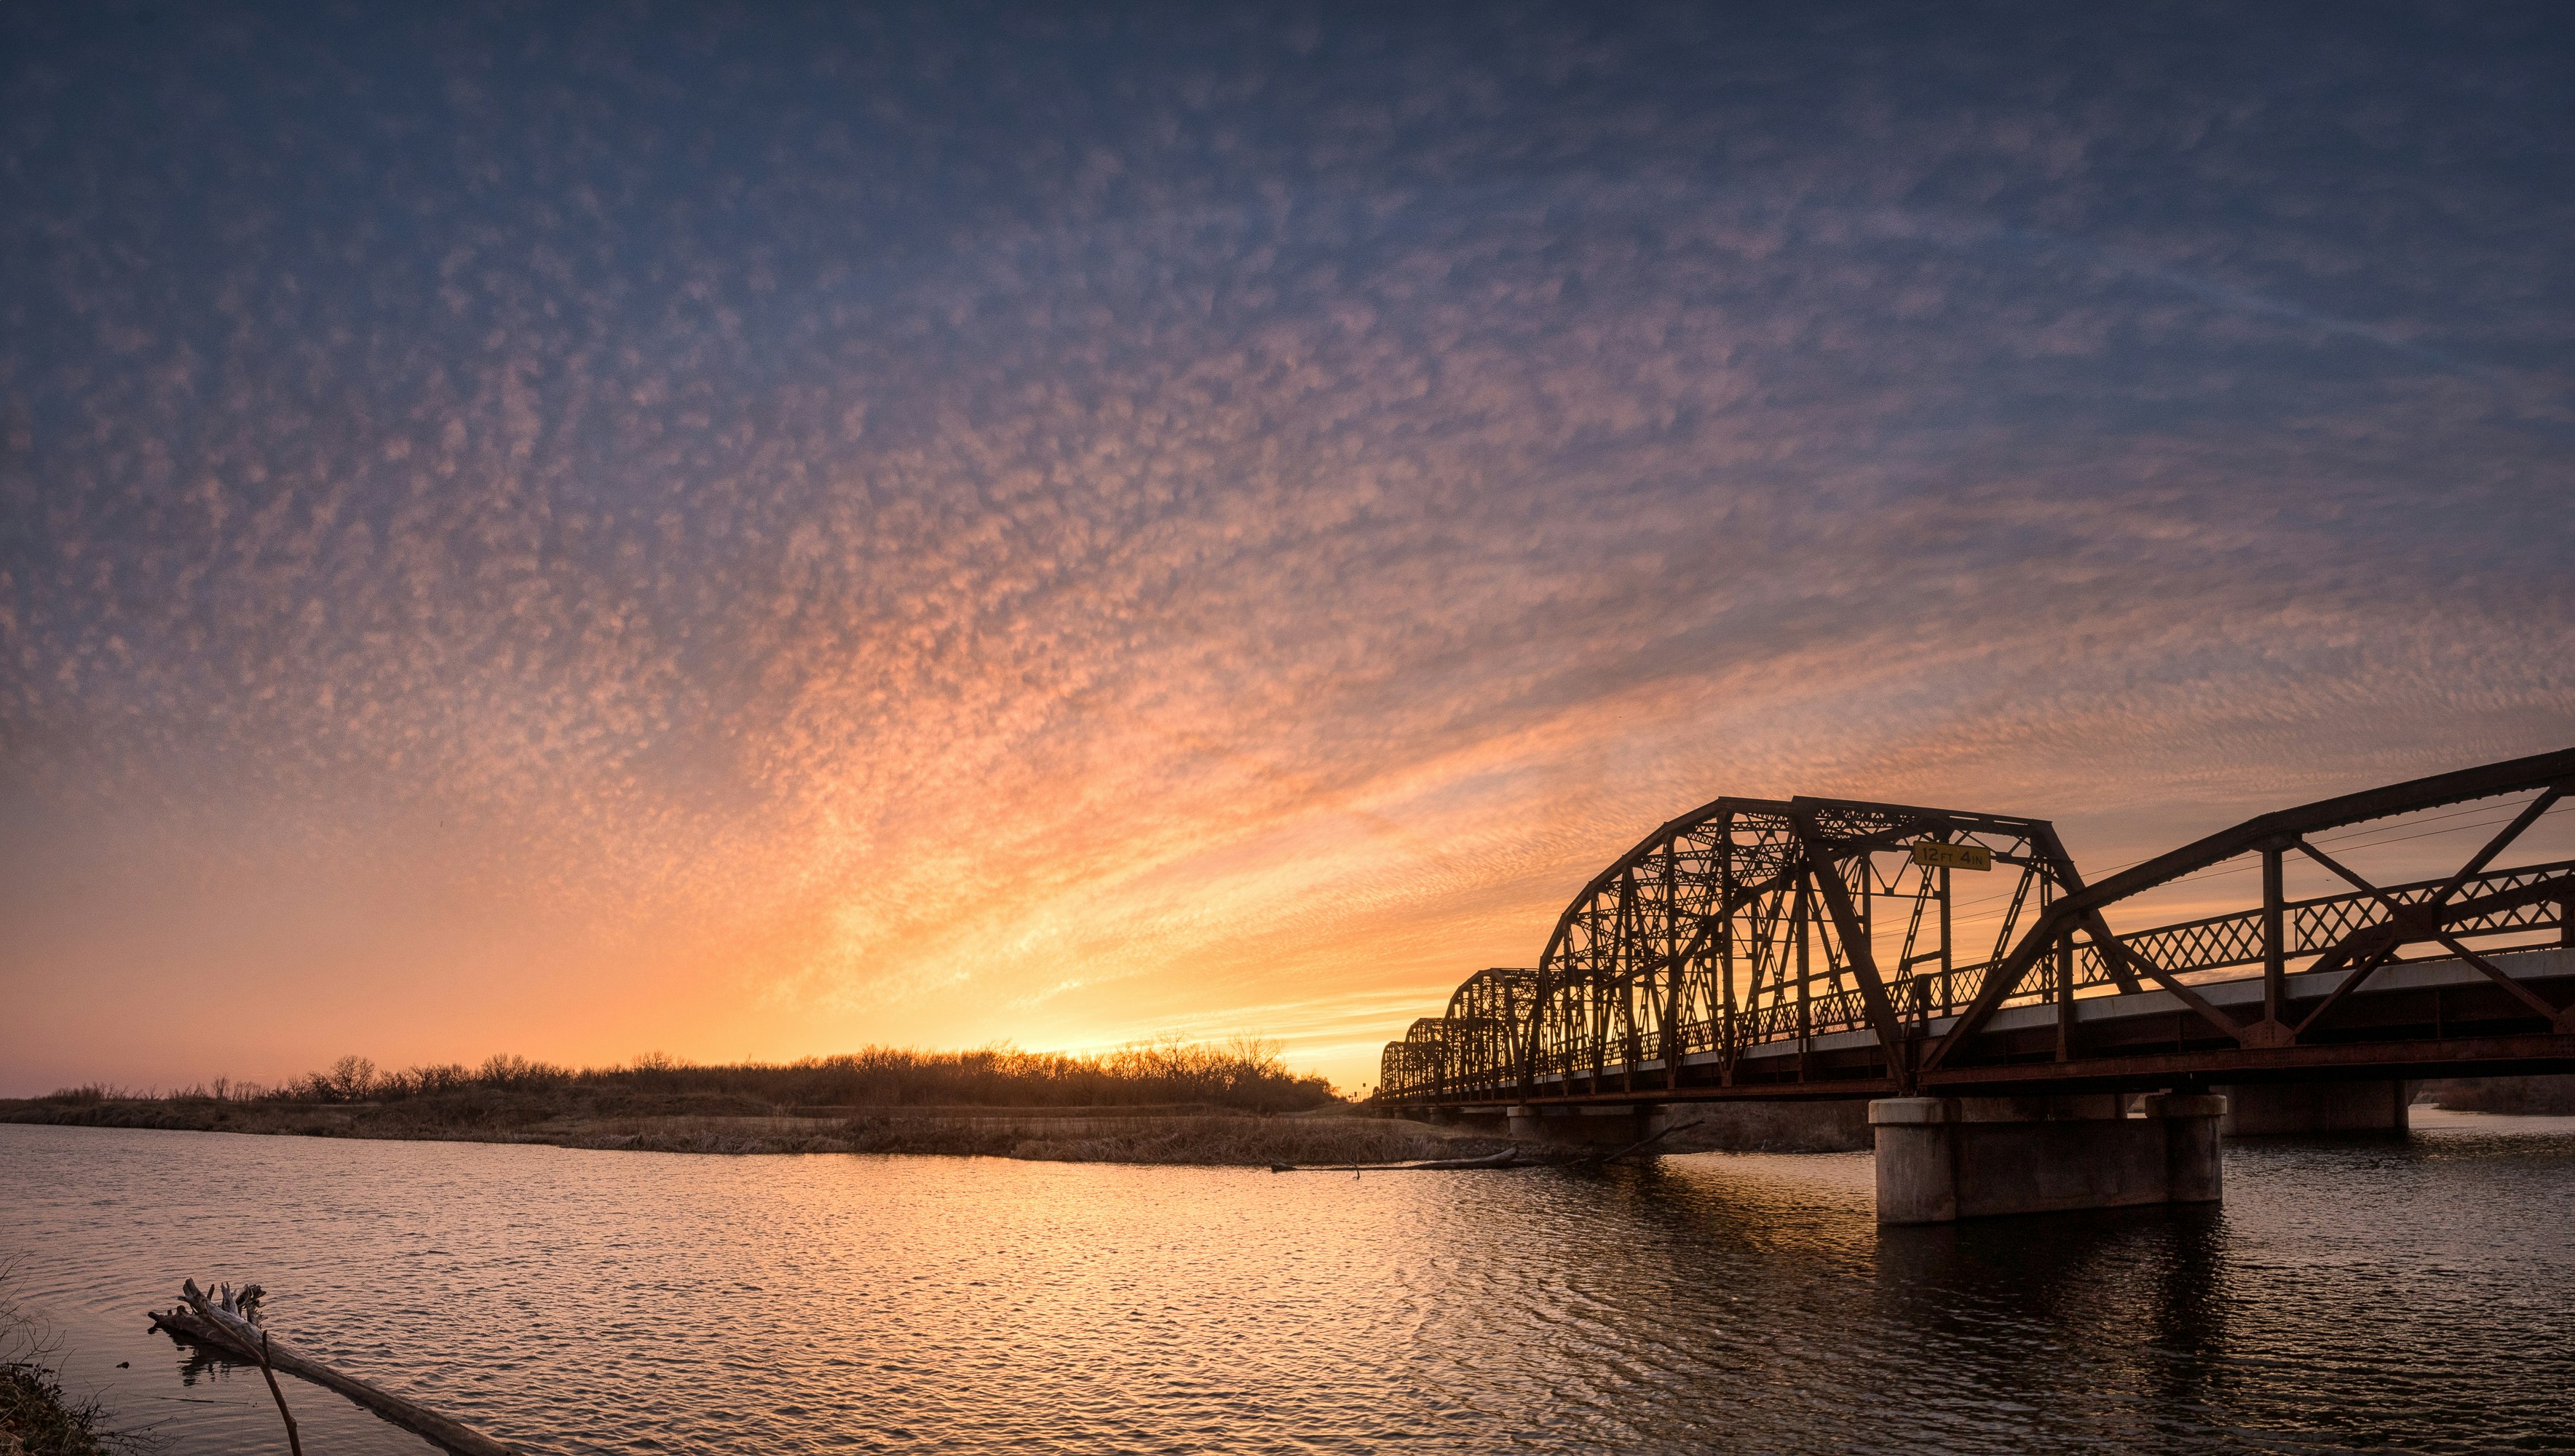 black metal bridge over the river during sunset